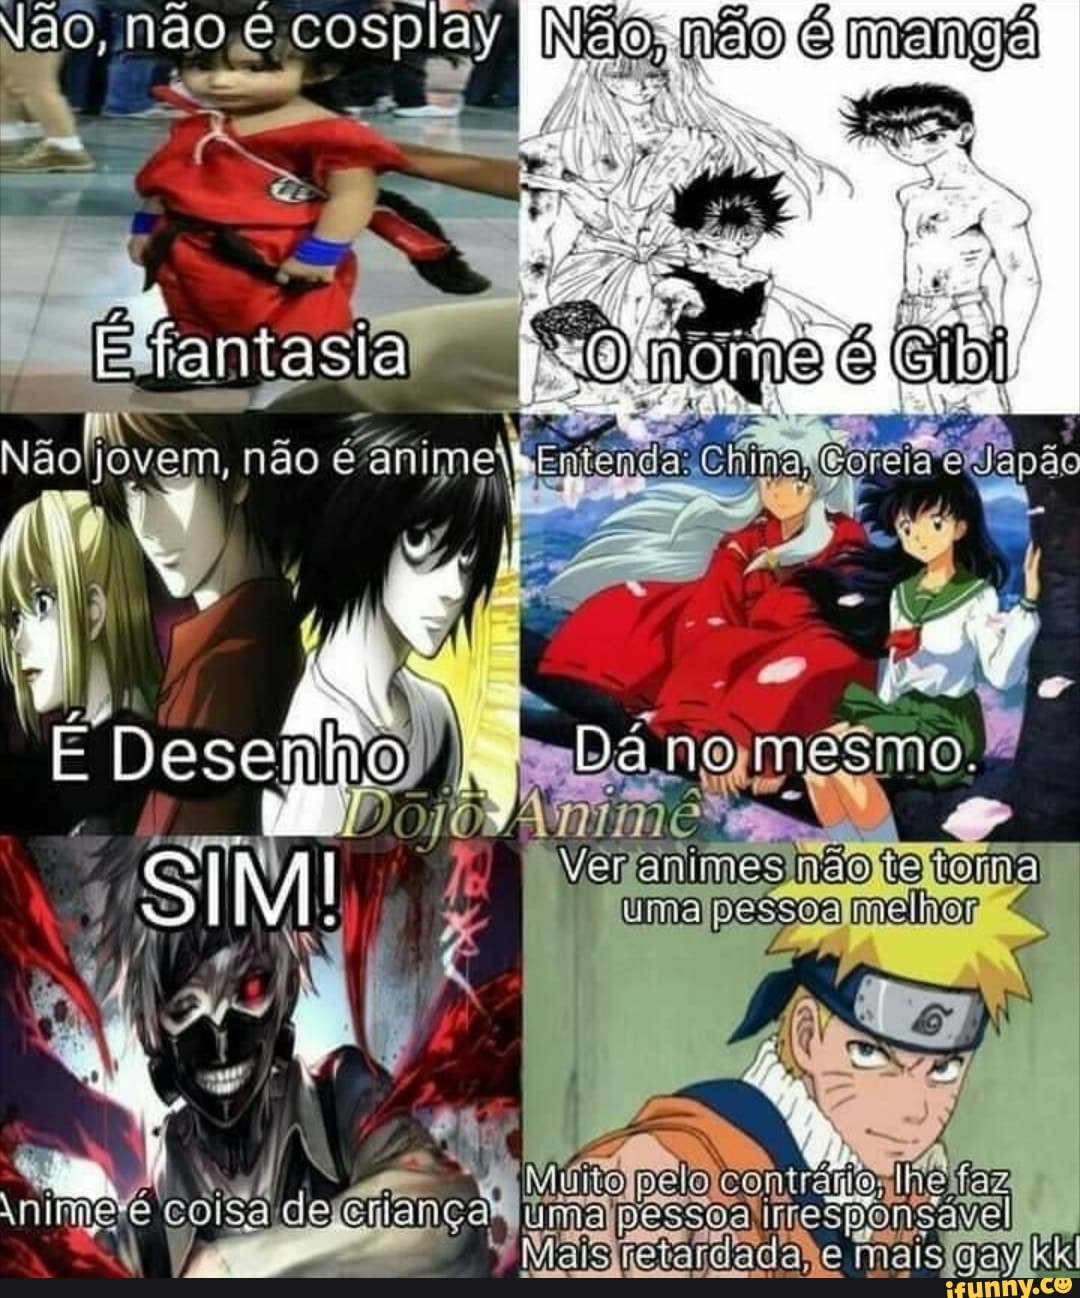 Animes e suas frases fora de contexto ffmeme *anime Meme #Animes - iFunny  Brazil